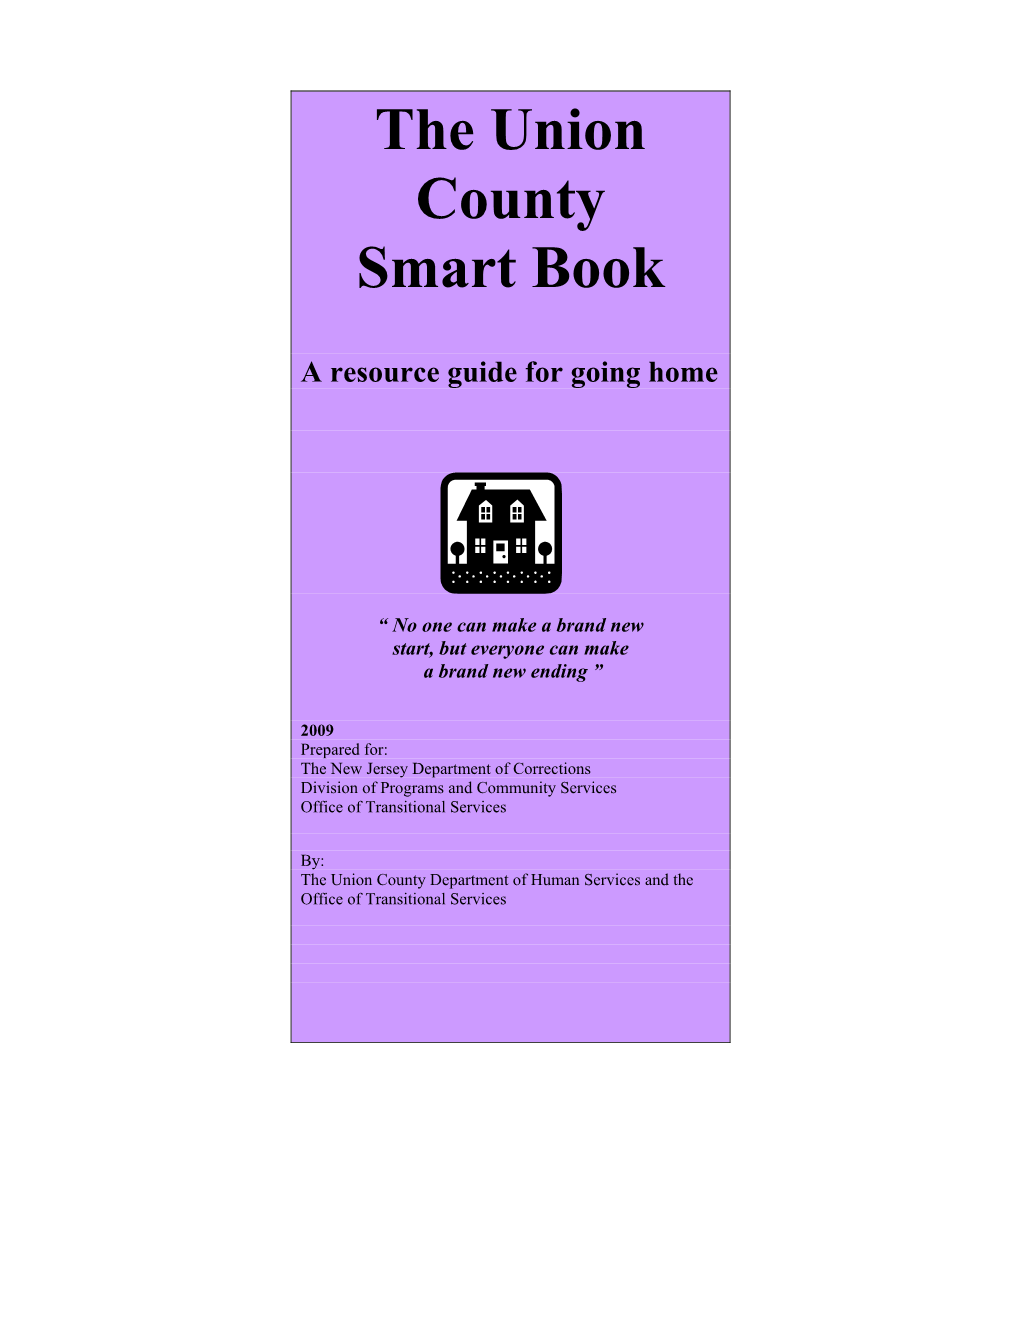 The Union County Smart Book